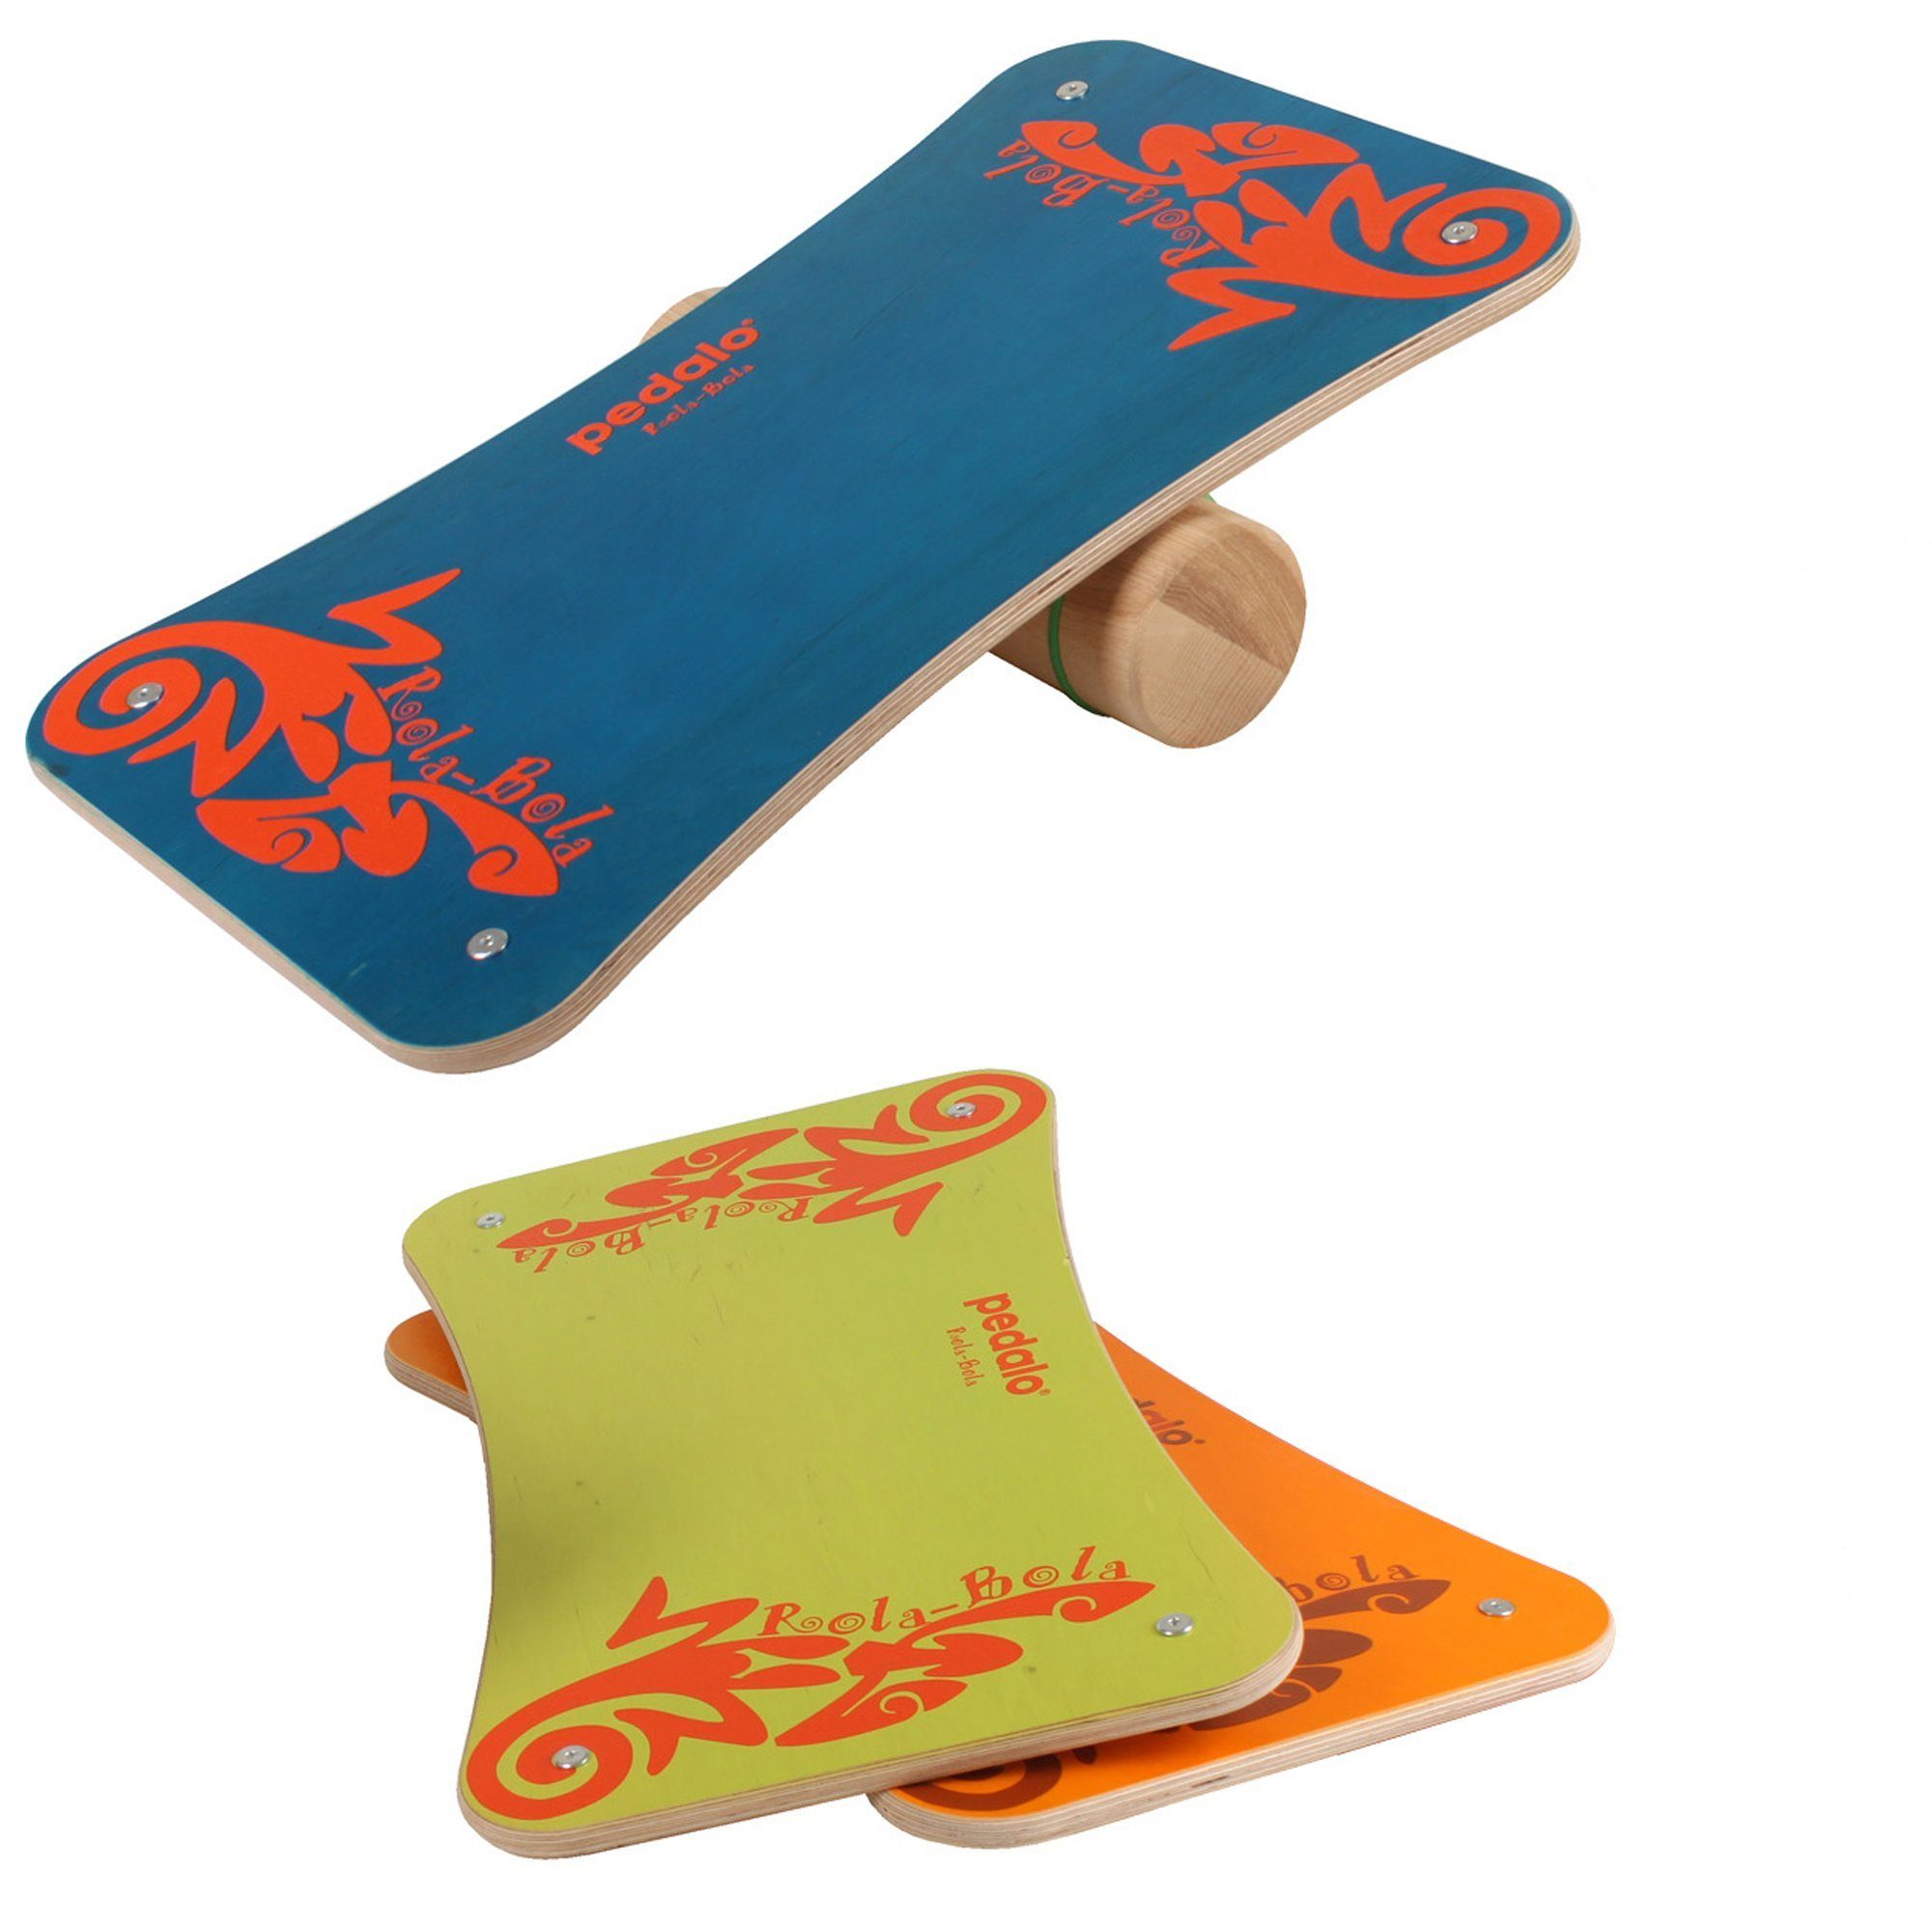 pedalo® Balanceboard Pedalo Gleichgewichtstrainer, blau Reflextrainer Rola-Bola Balanceboard